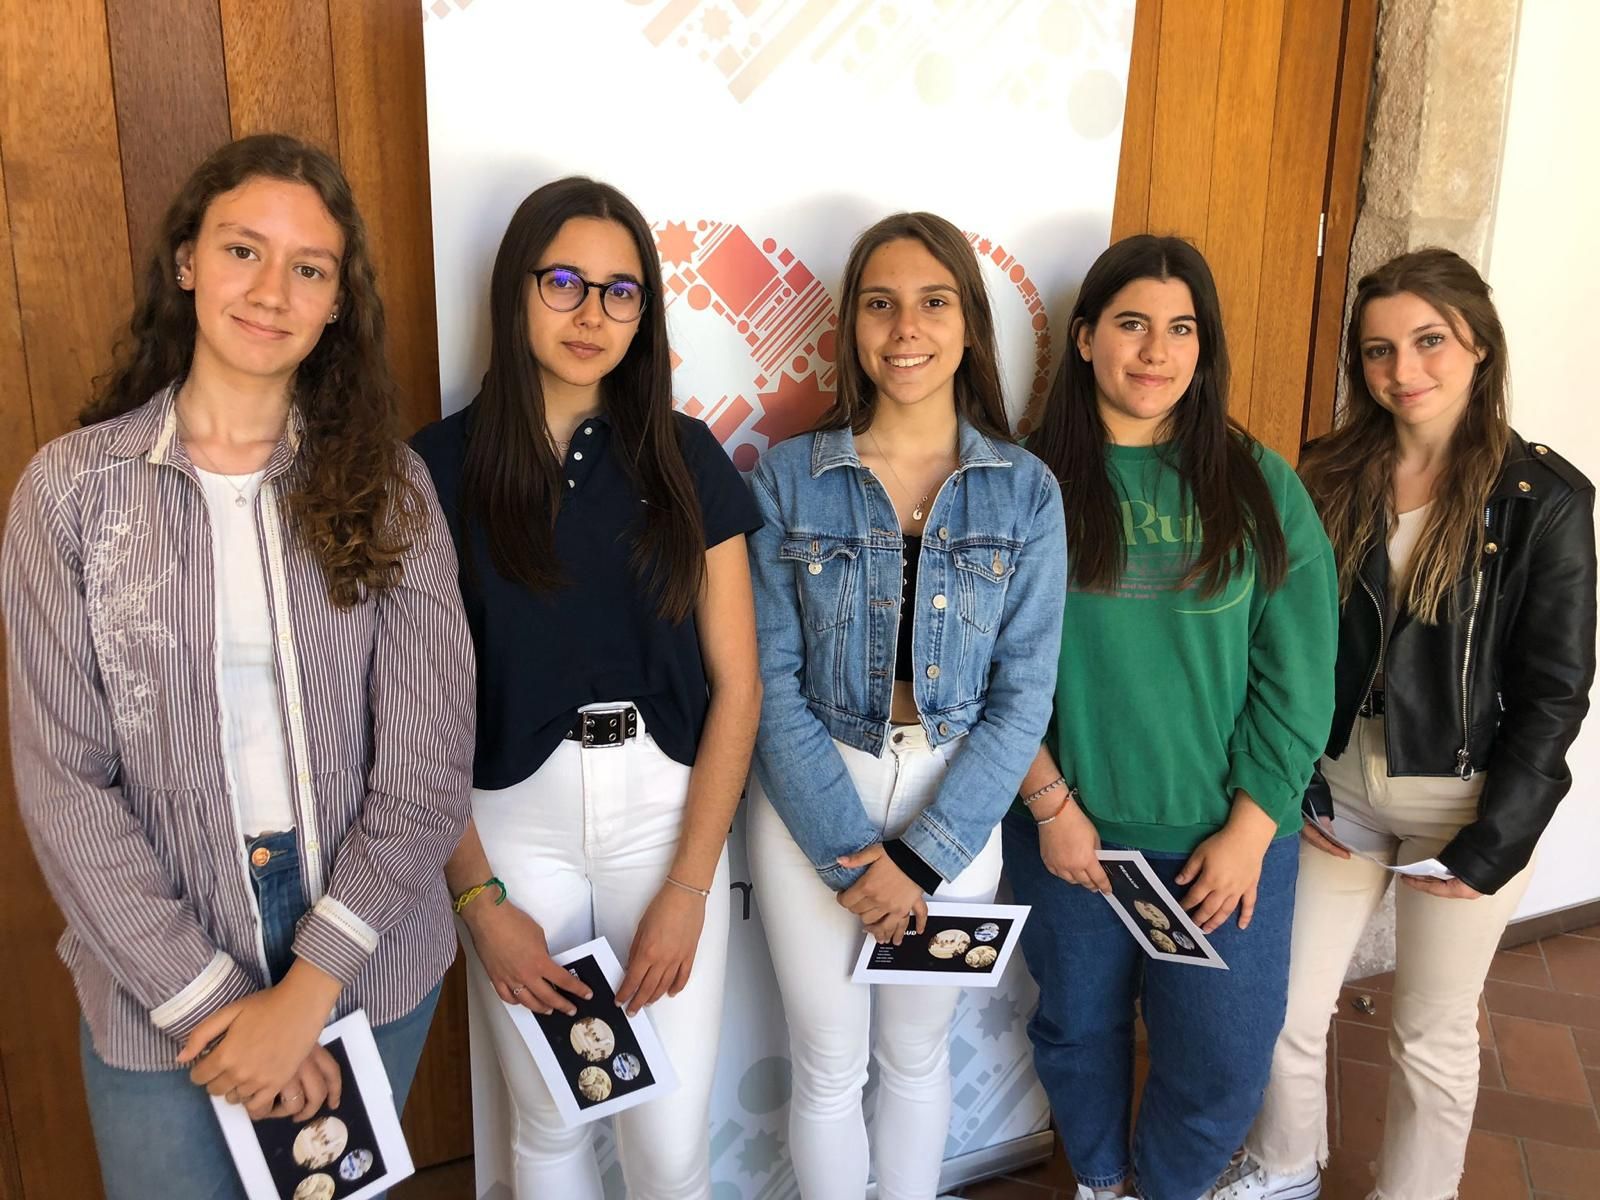 El projecte Renaud el presenten les alumnes de 4t d’ESO de La Salle Figueres